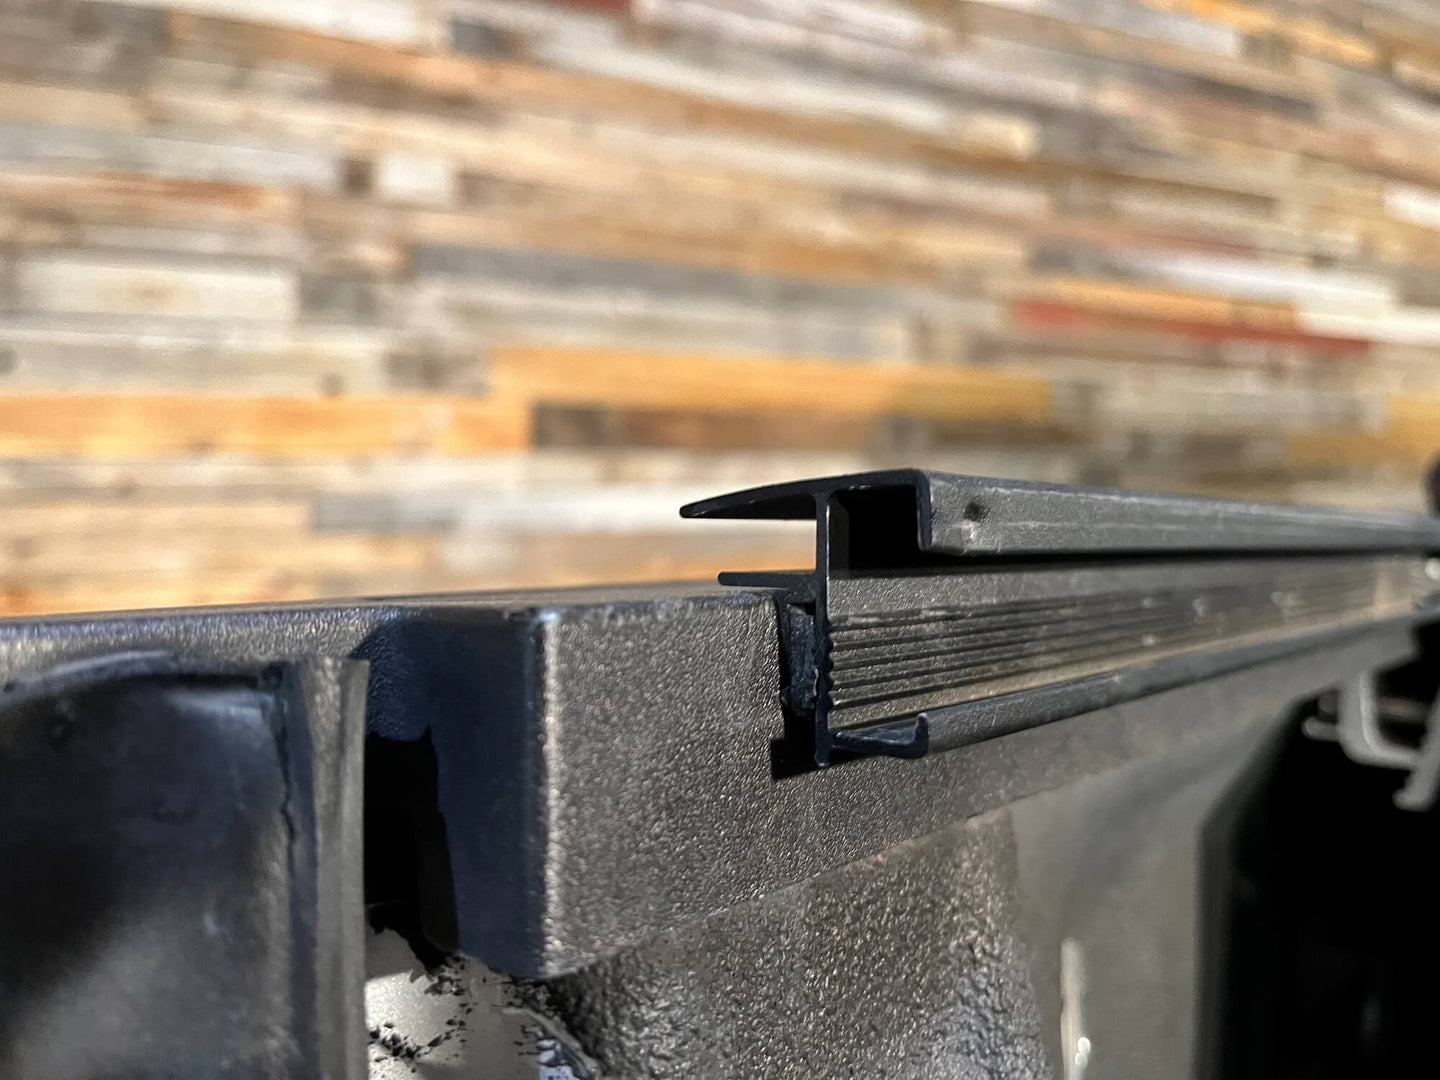 Sawtooth Stretch tonneau black aluminum side rails installed on Ford F-150 pickup truck bed rails